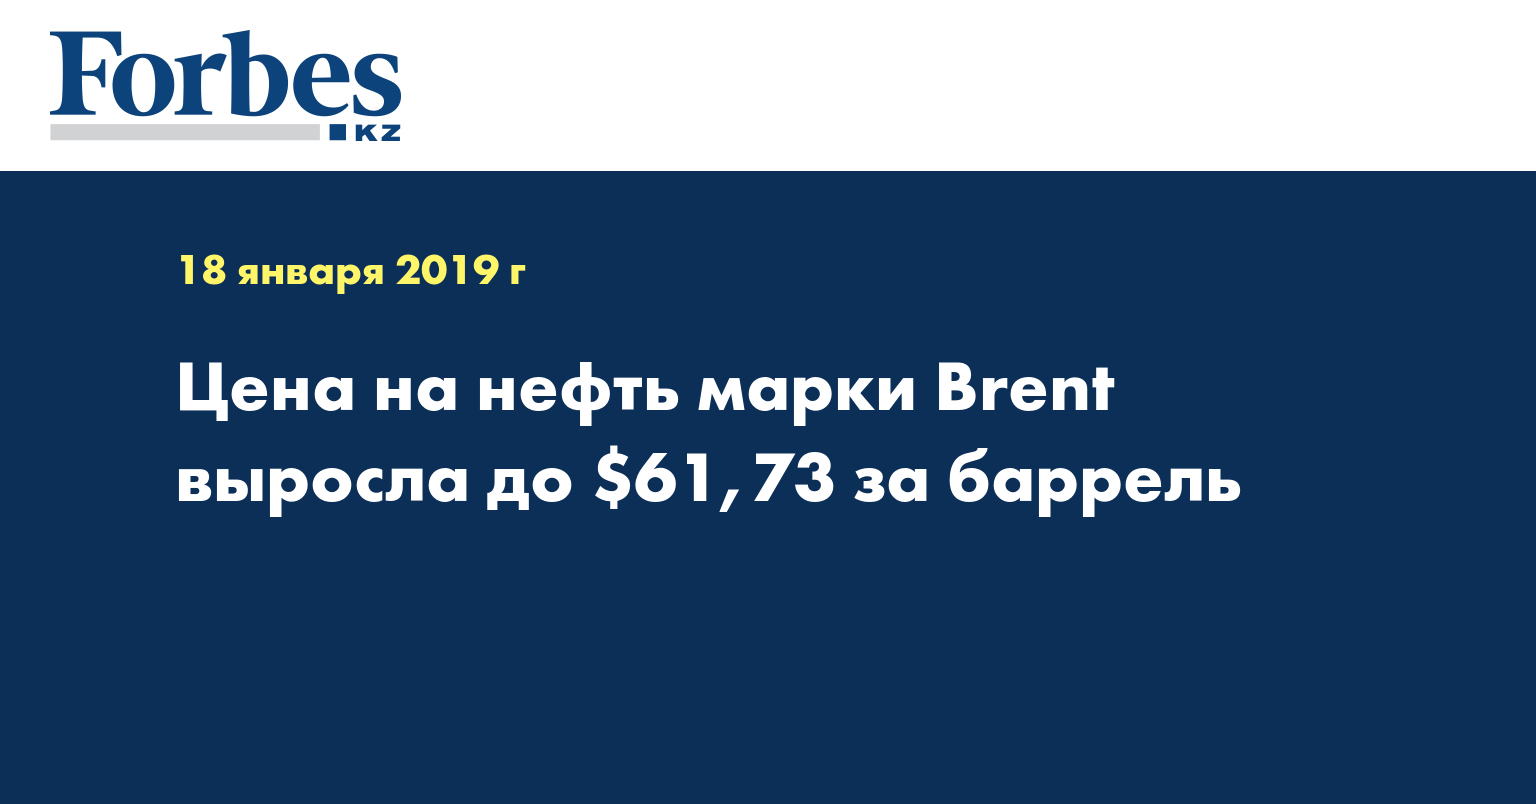 Цена на нефть марки Brent выросла до $61,73 за баррель